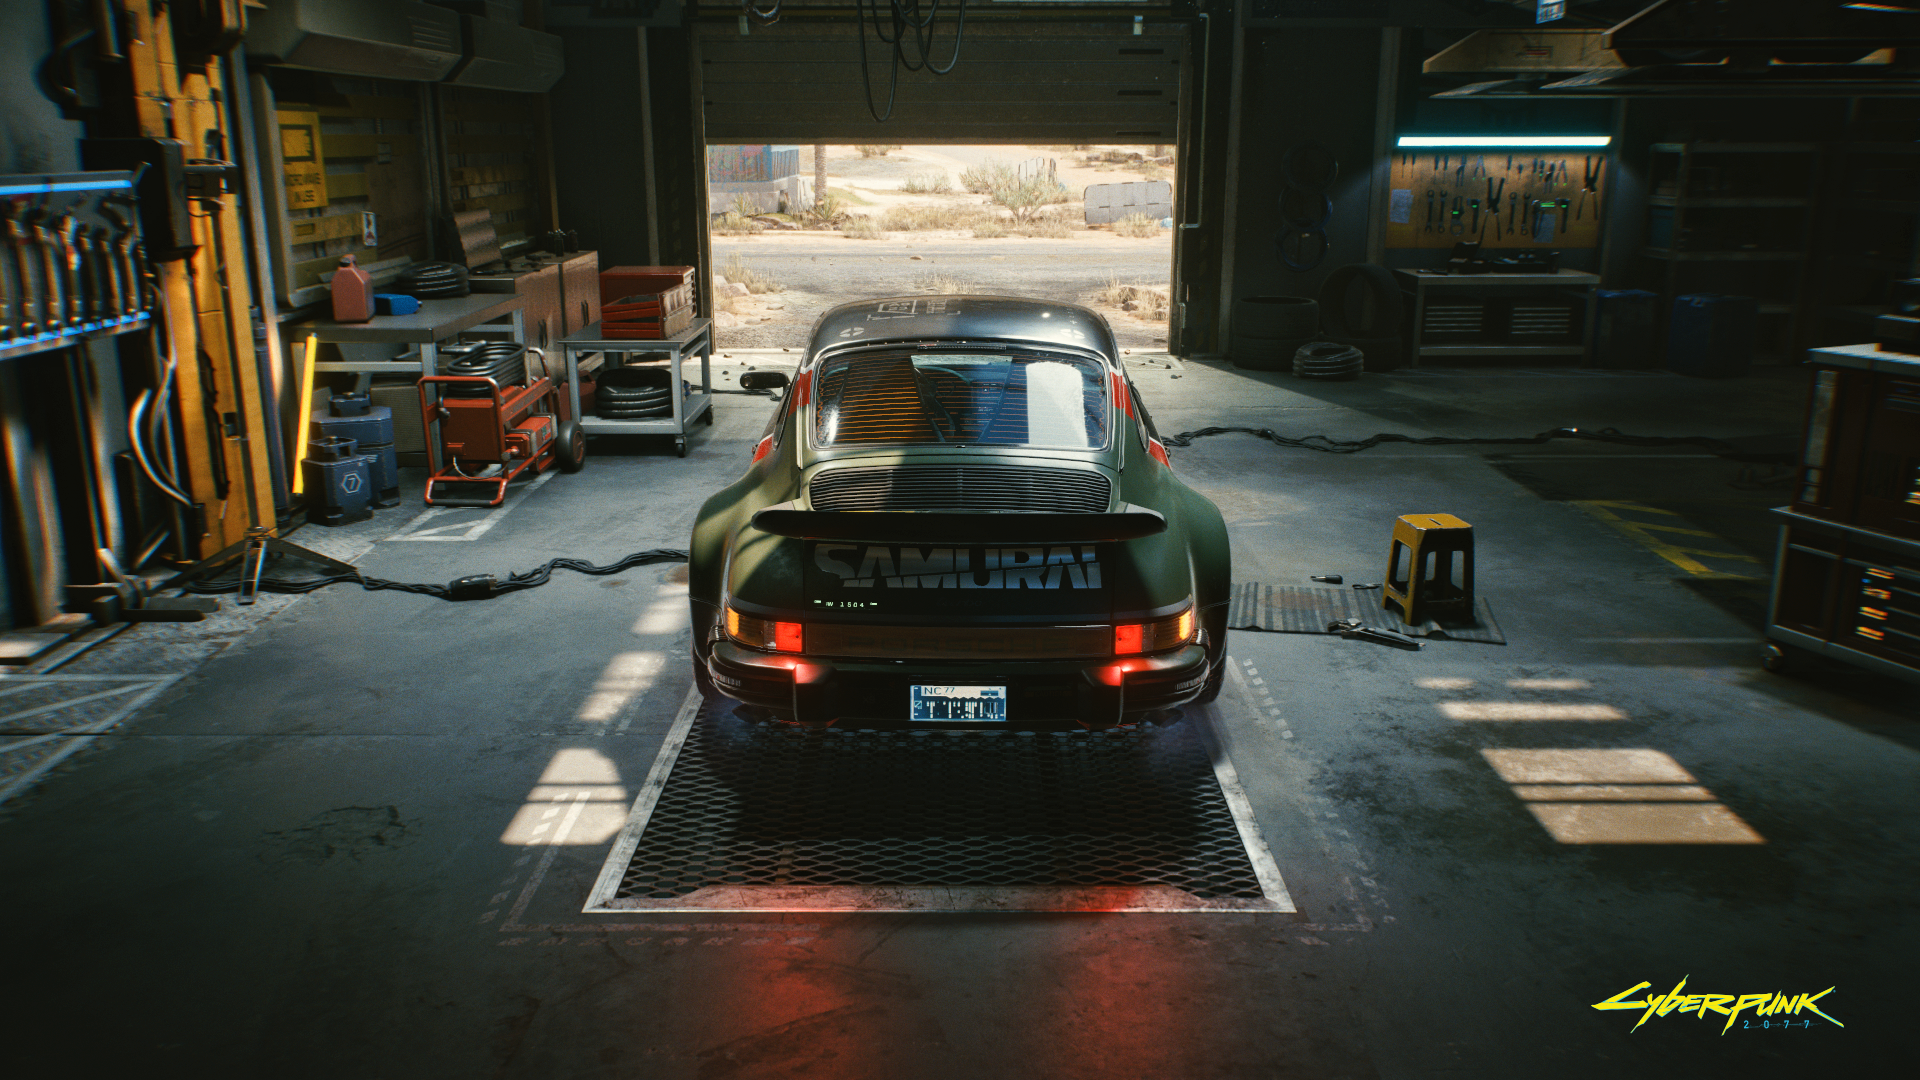 The Porsche 911 Turbo from Cyberpunk 2077 parked in a garage